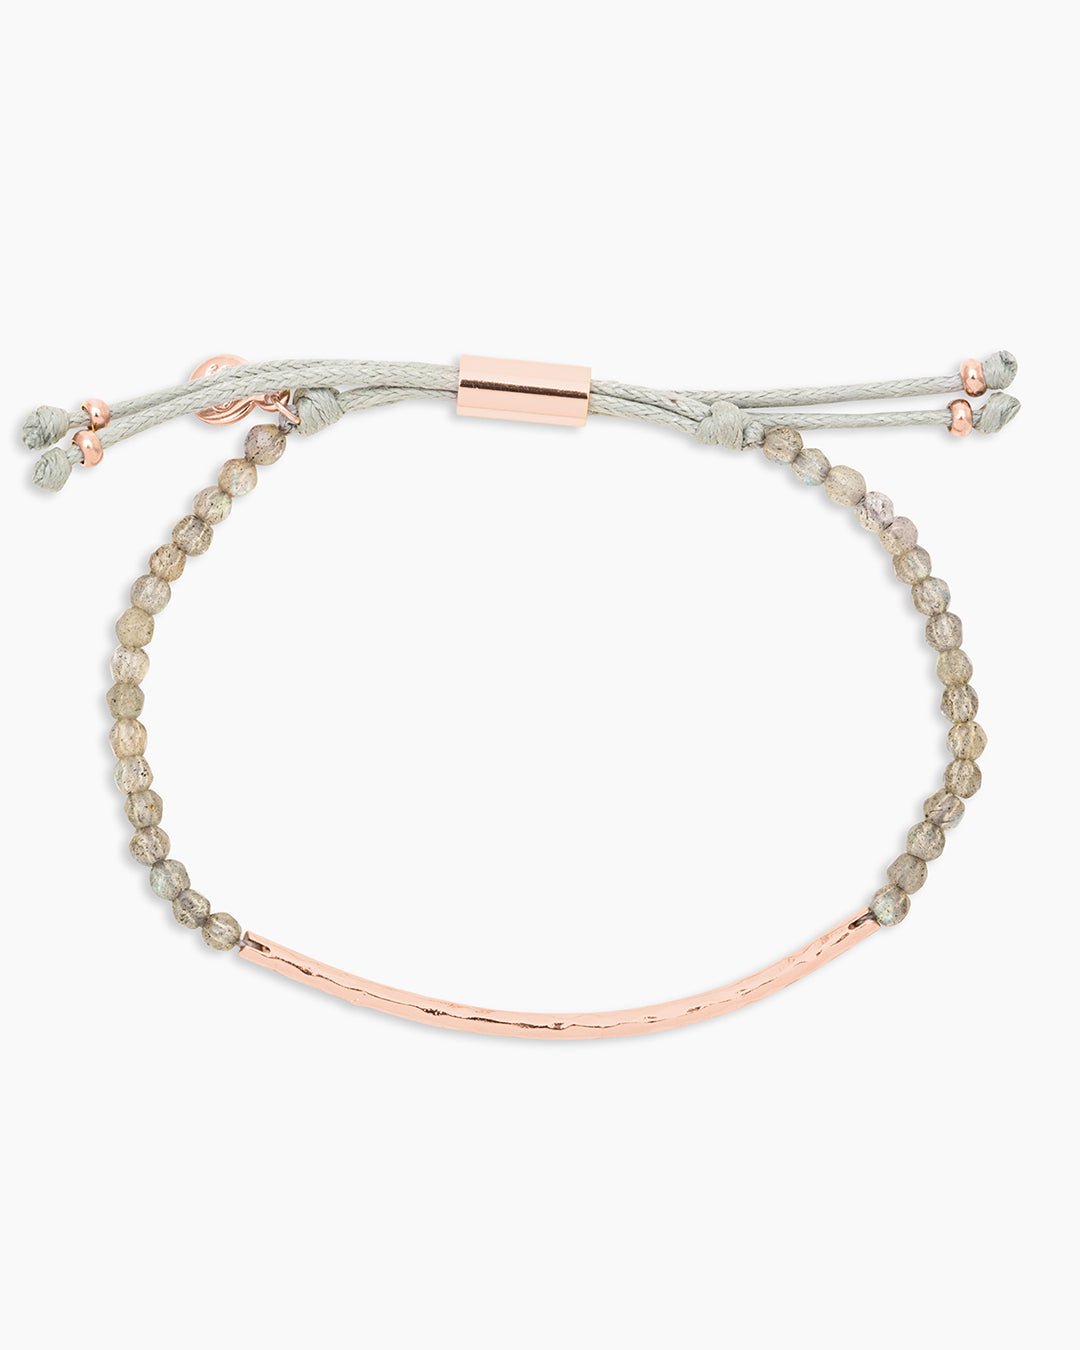 RosePower Gemstone Bracelet for Balance || option::Rose Gold Plated, Labradorite